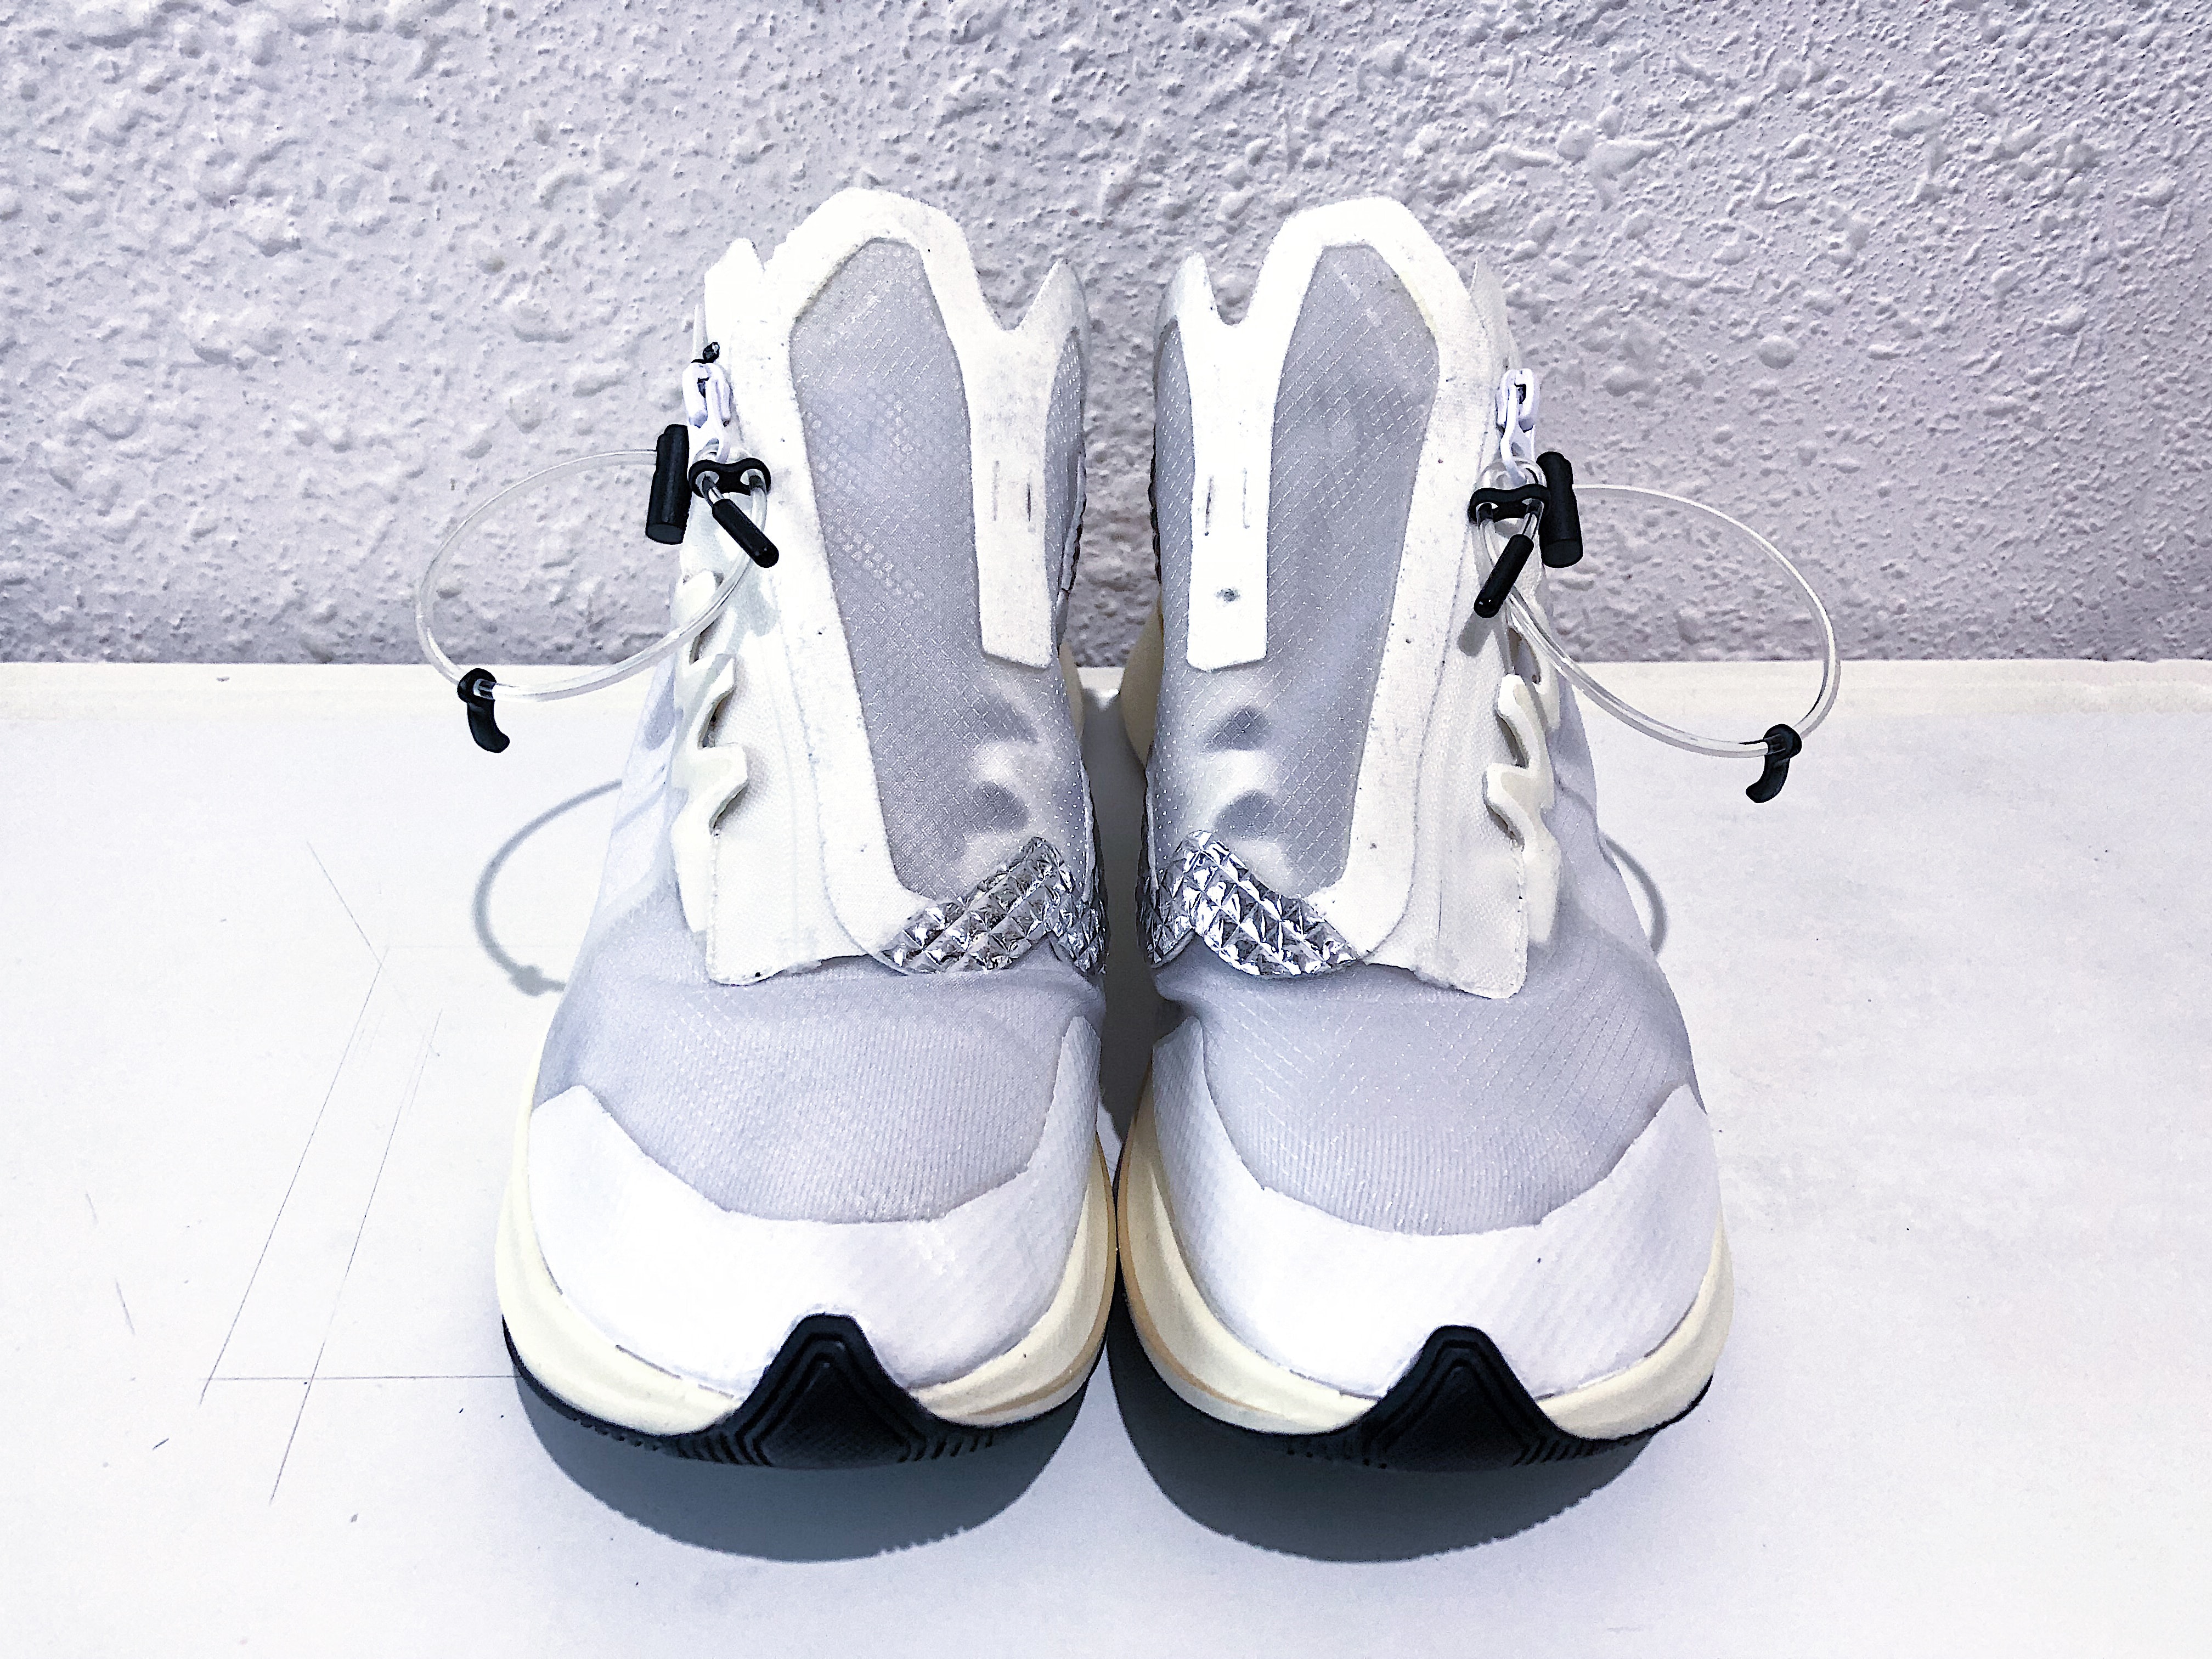 Ziv Lee 打造 Nike Zoom Fly 太空主題「NASA Suits Z」客製鞋款